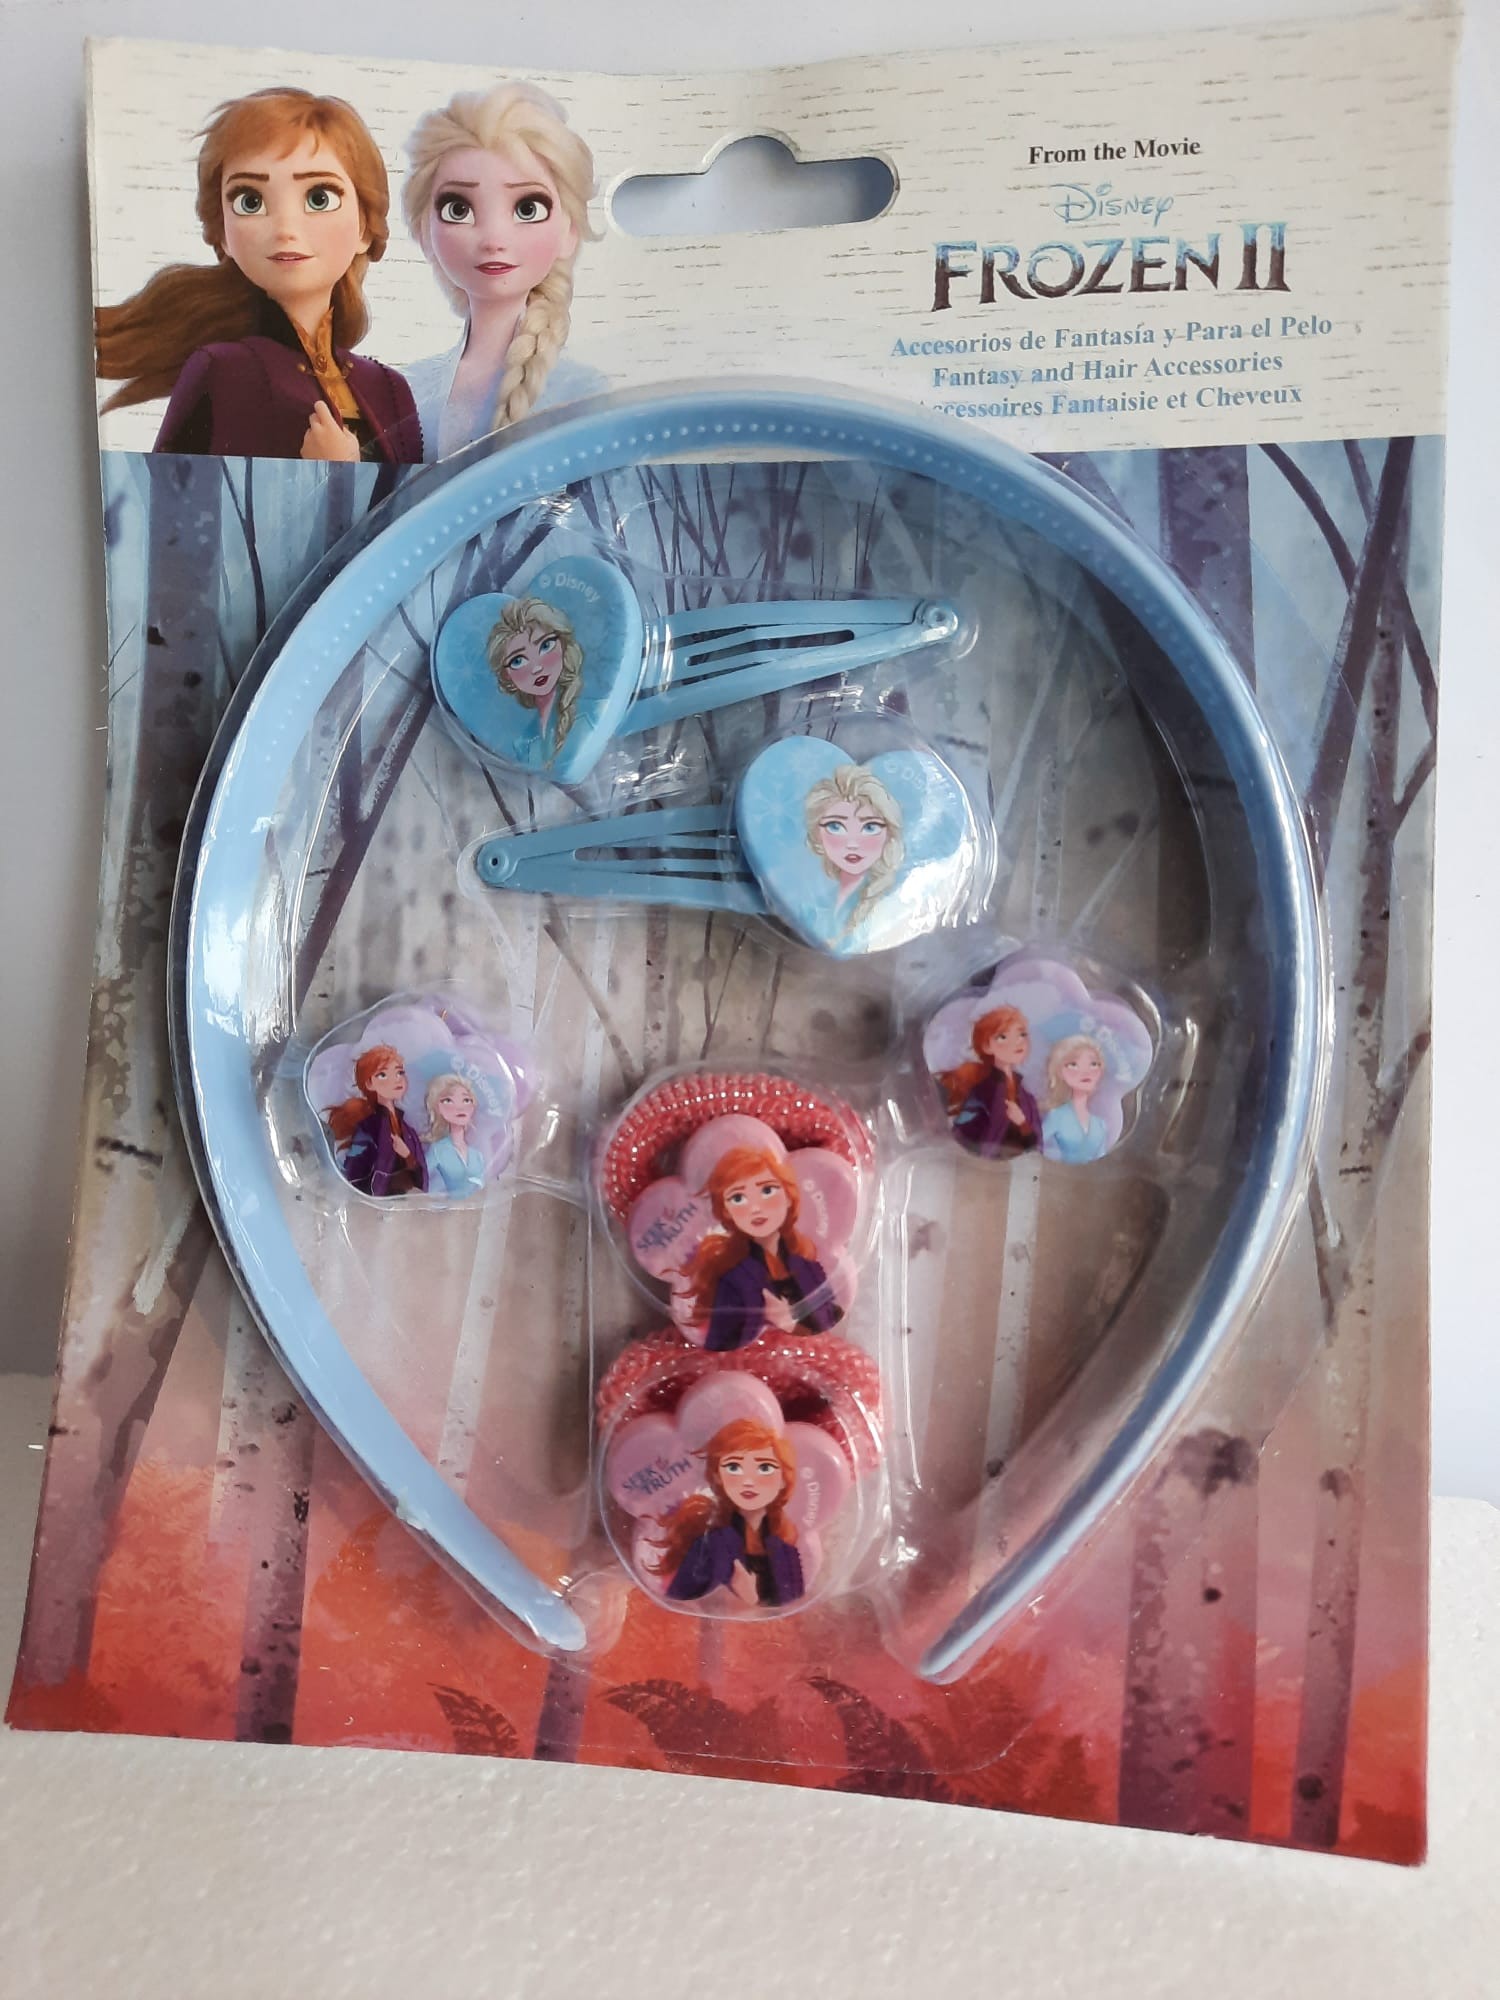 Kit Festa Compleanno Disney Frozen II 2 Principesse Elsa Anna Coordinato  Tavola